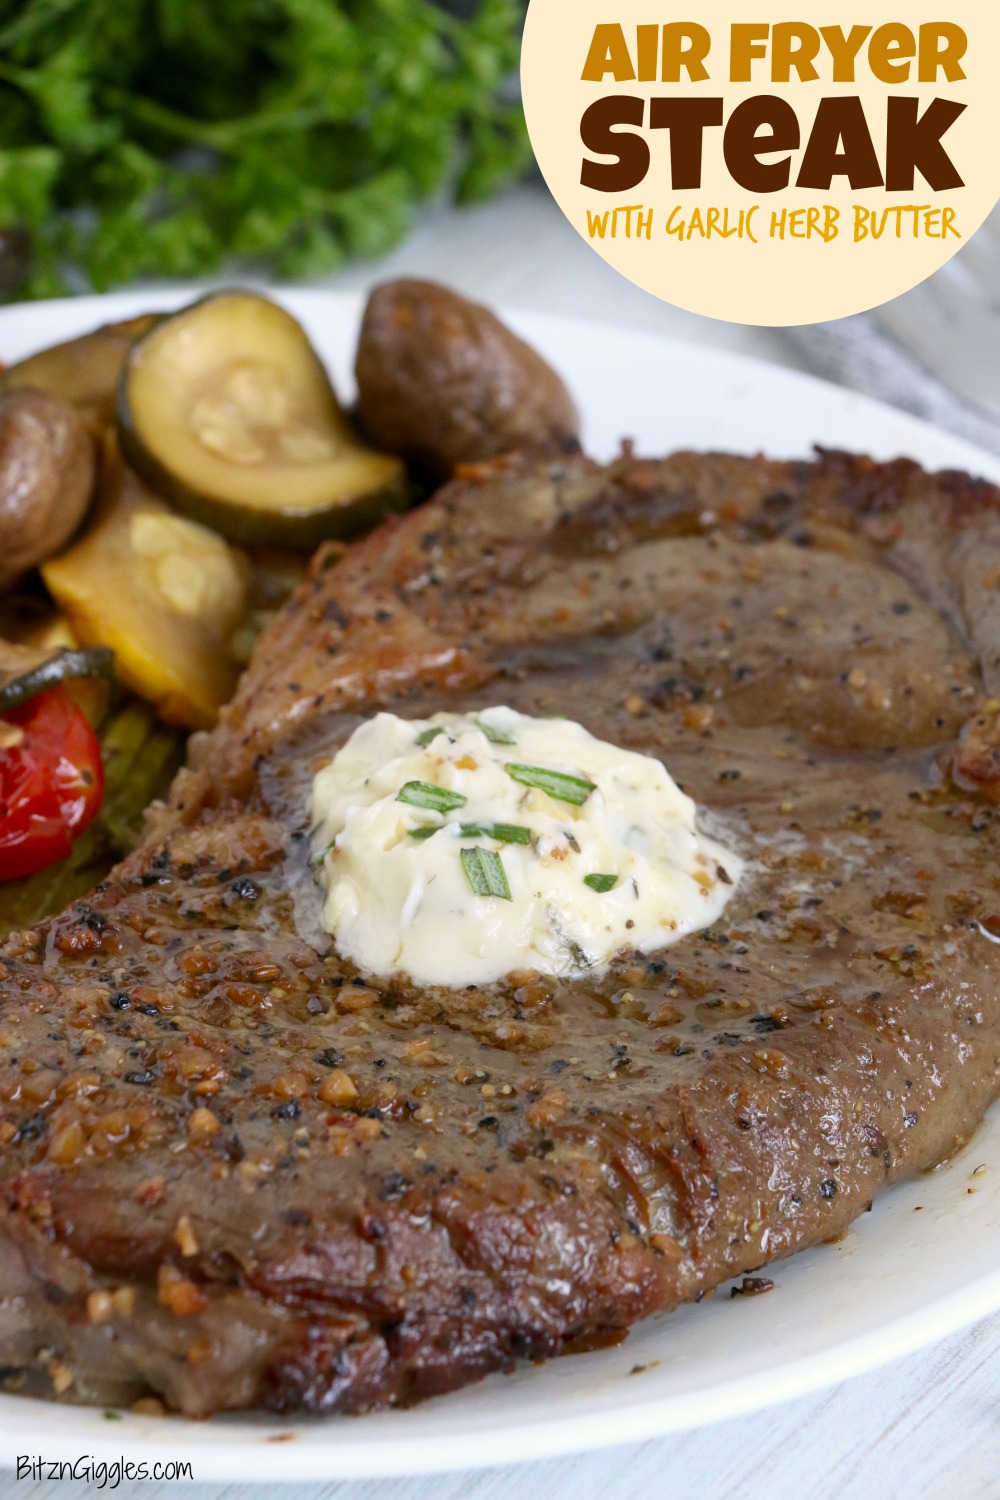 https://bitzngiggles.com/wp-content/uploads/2020/06/Air-Fryer-Steak-with-Garlic-Herb-Butter-Pinterest.jpg